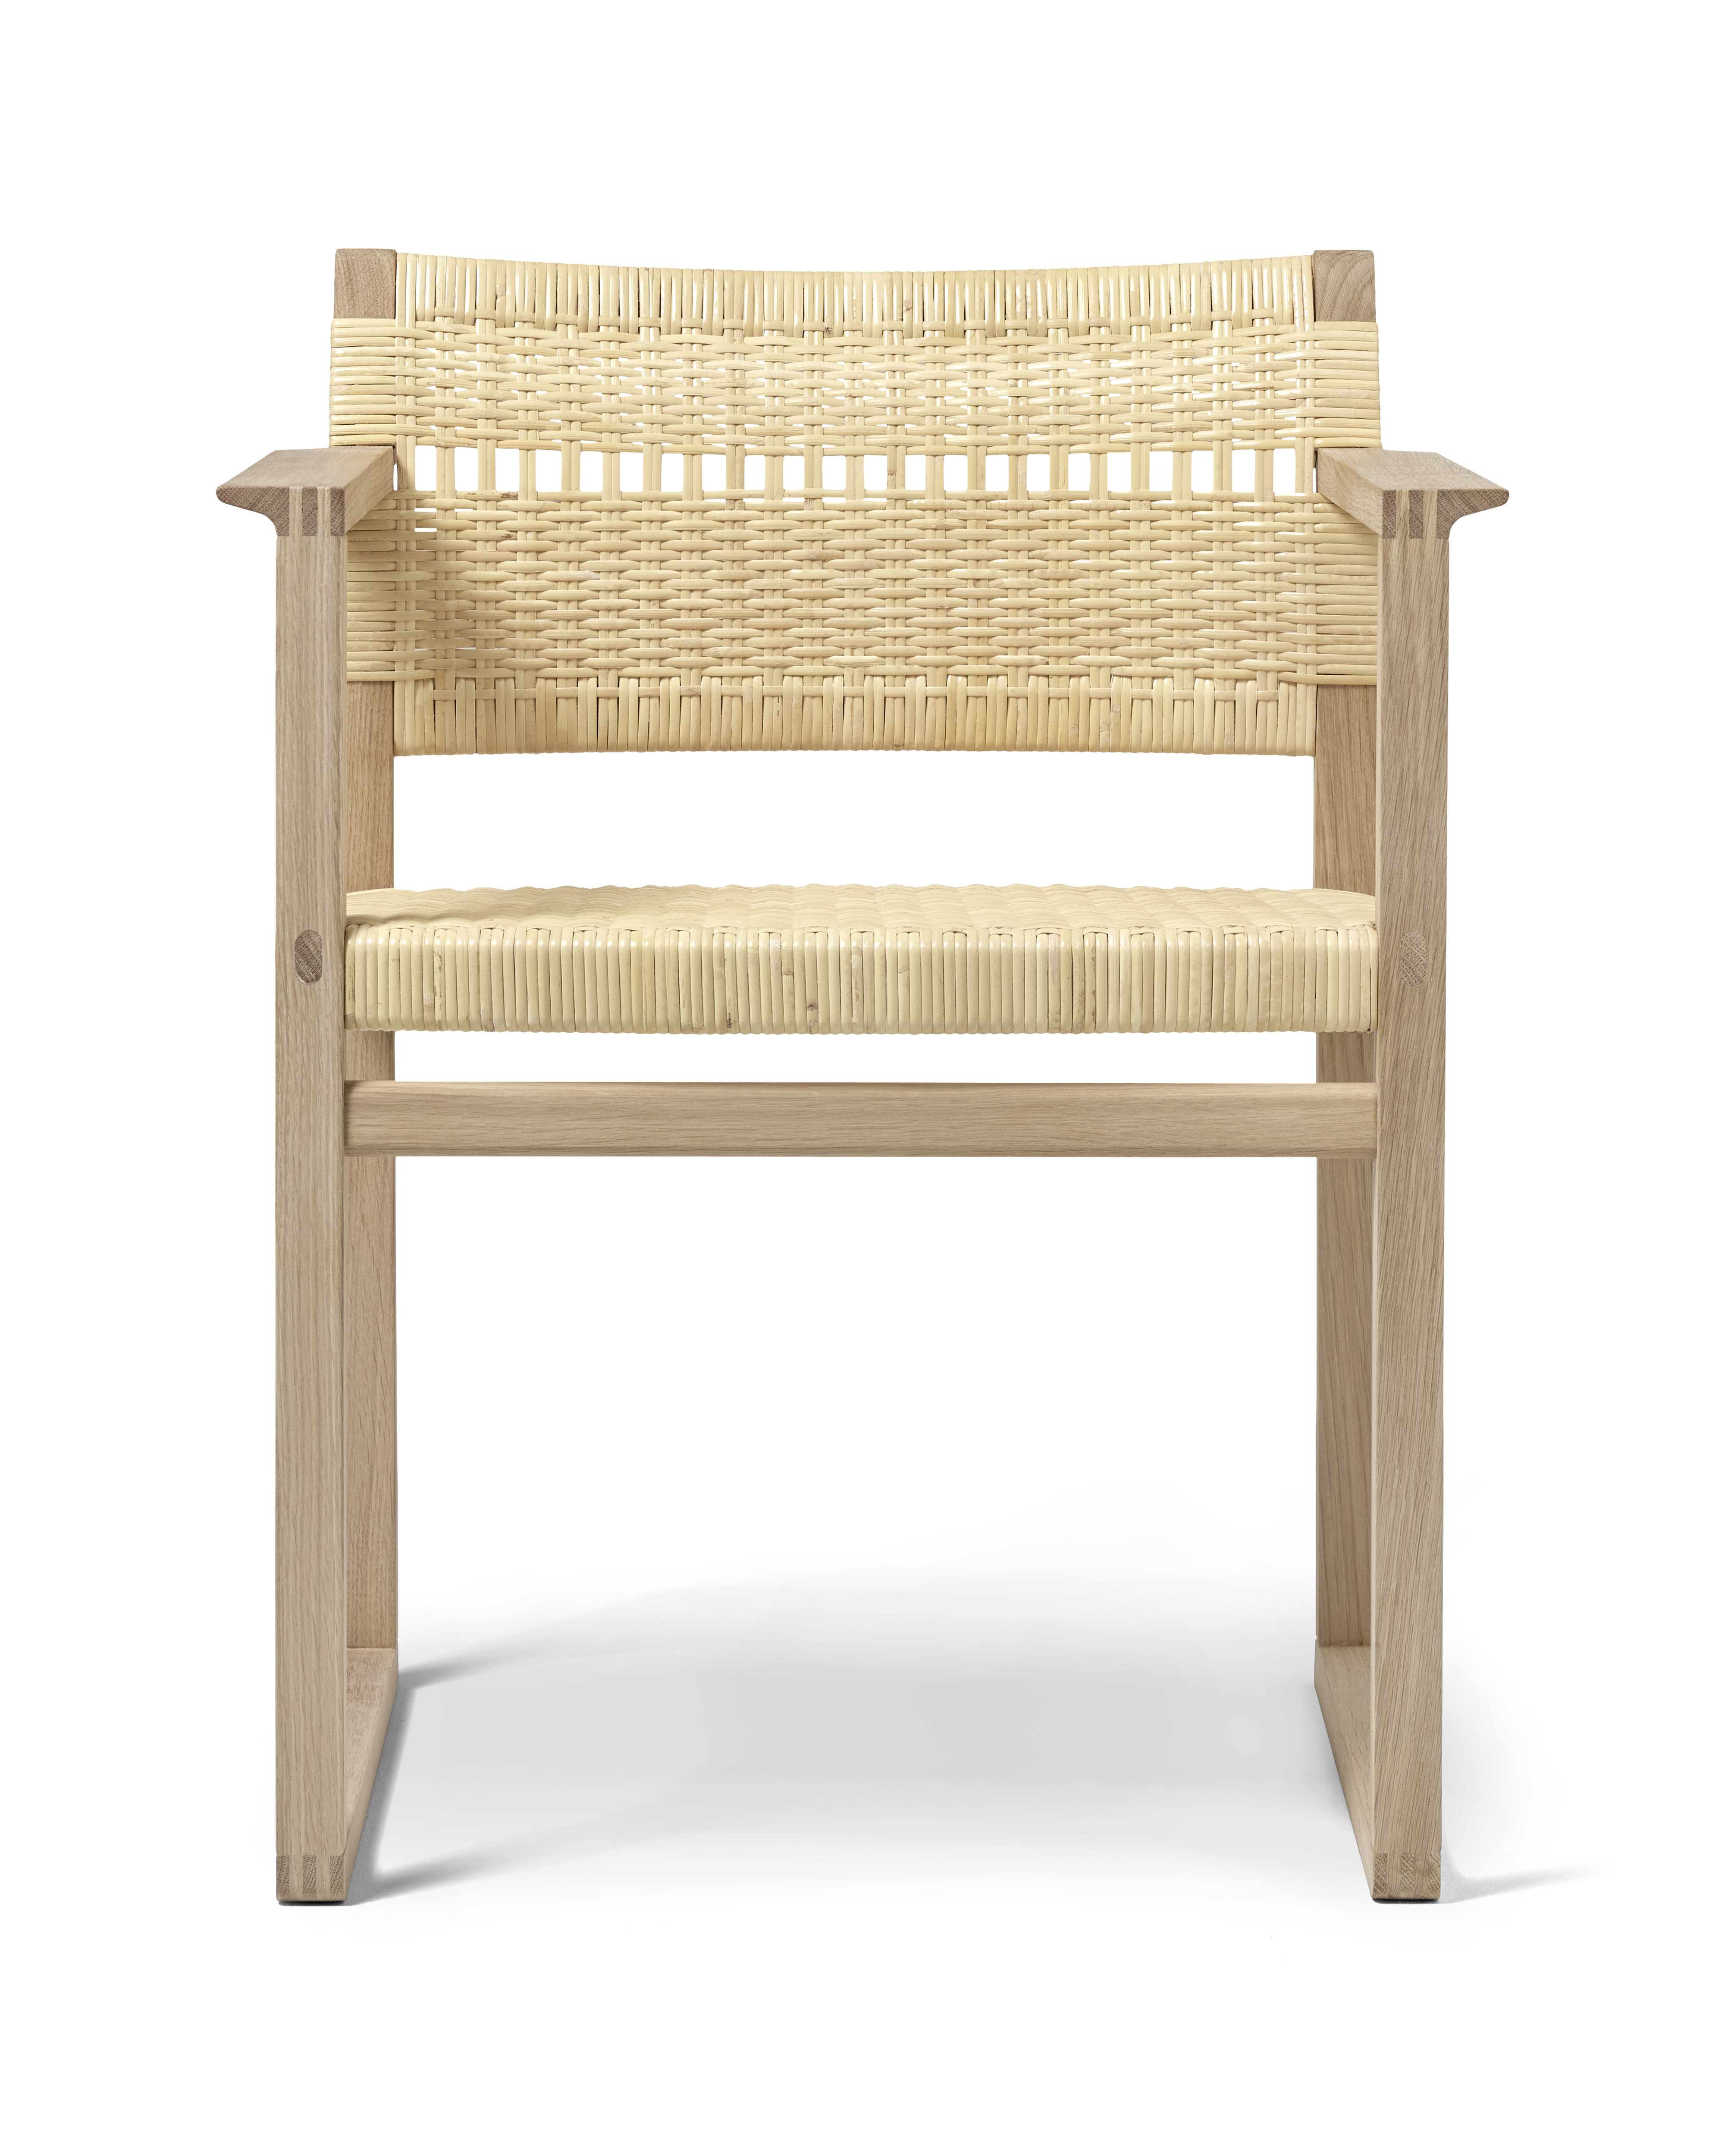 Fredericia Søborg chair 3050, wood base, lacquered oak